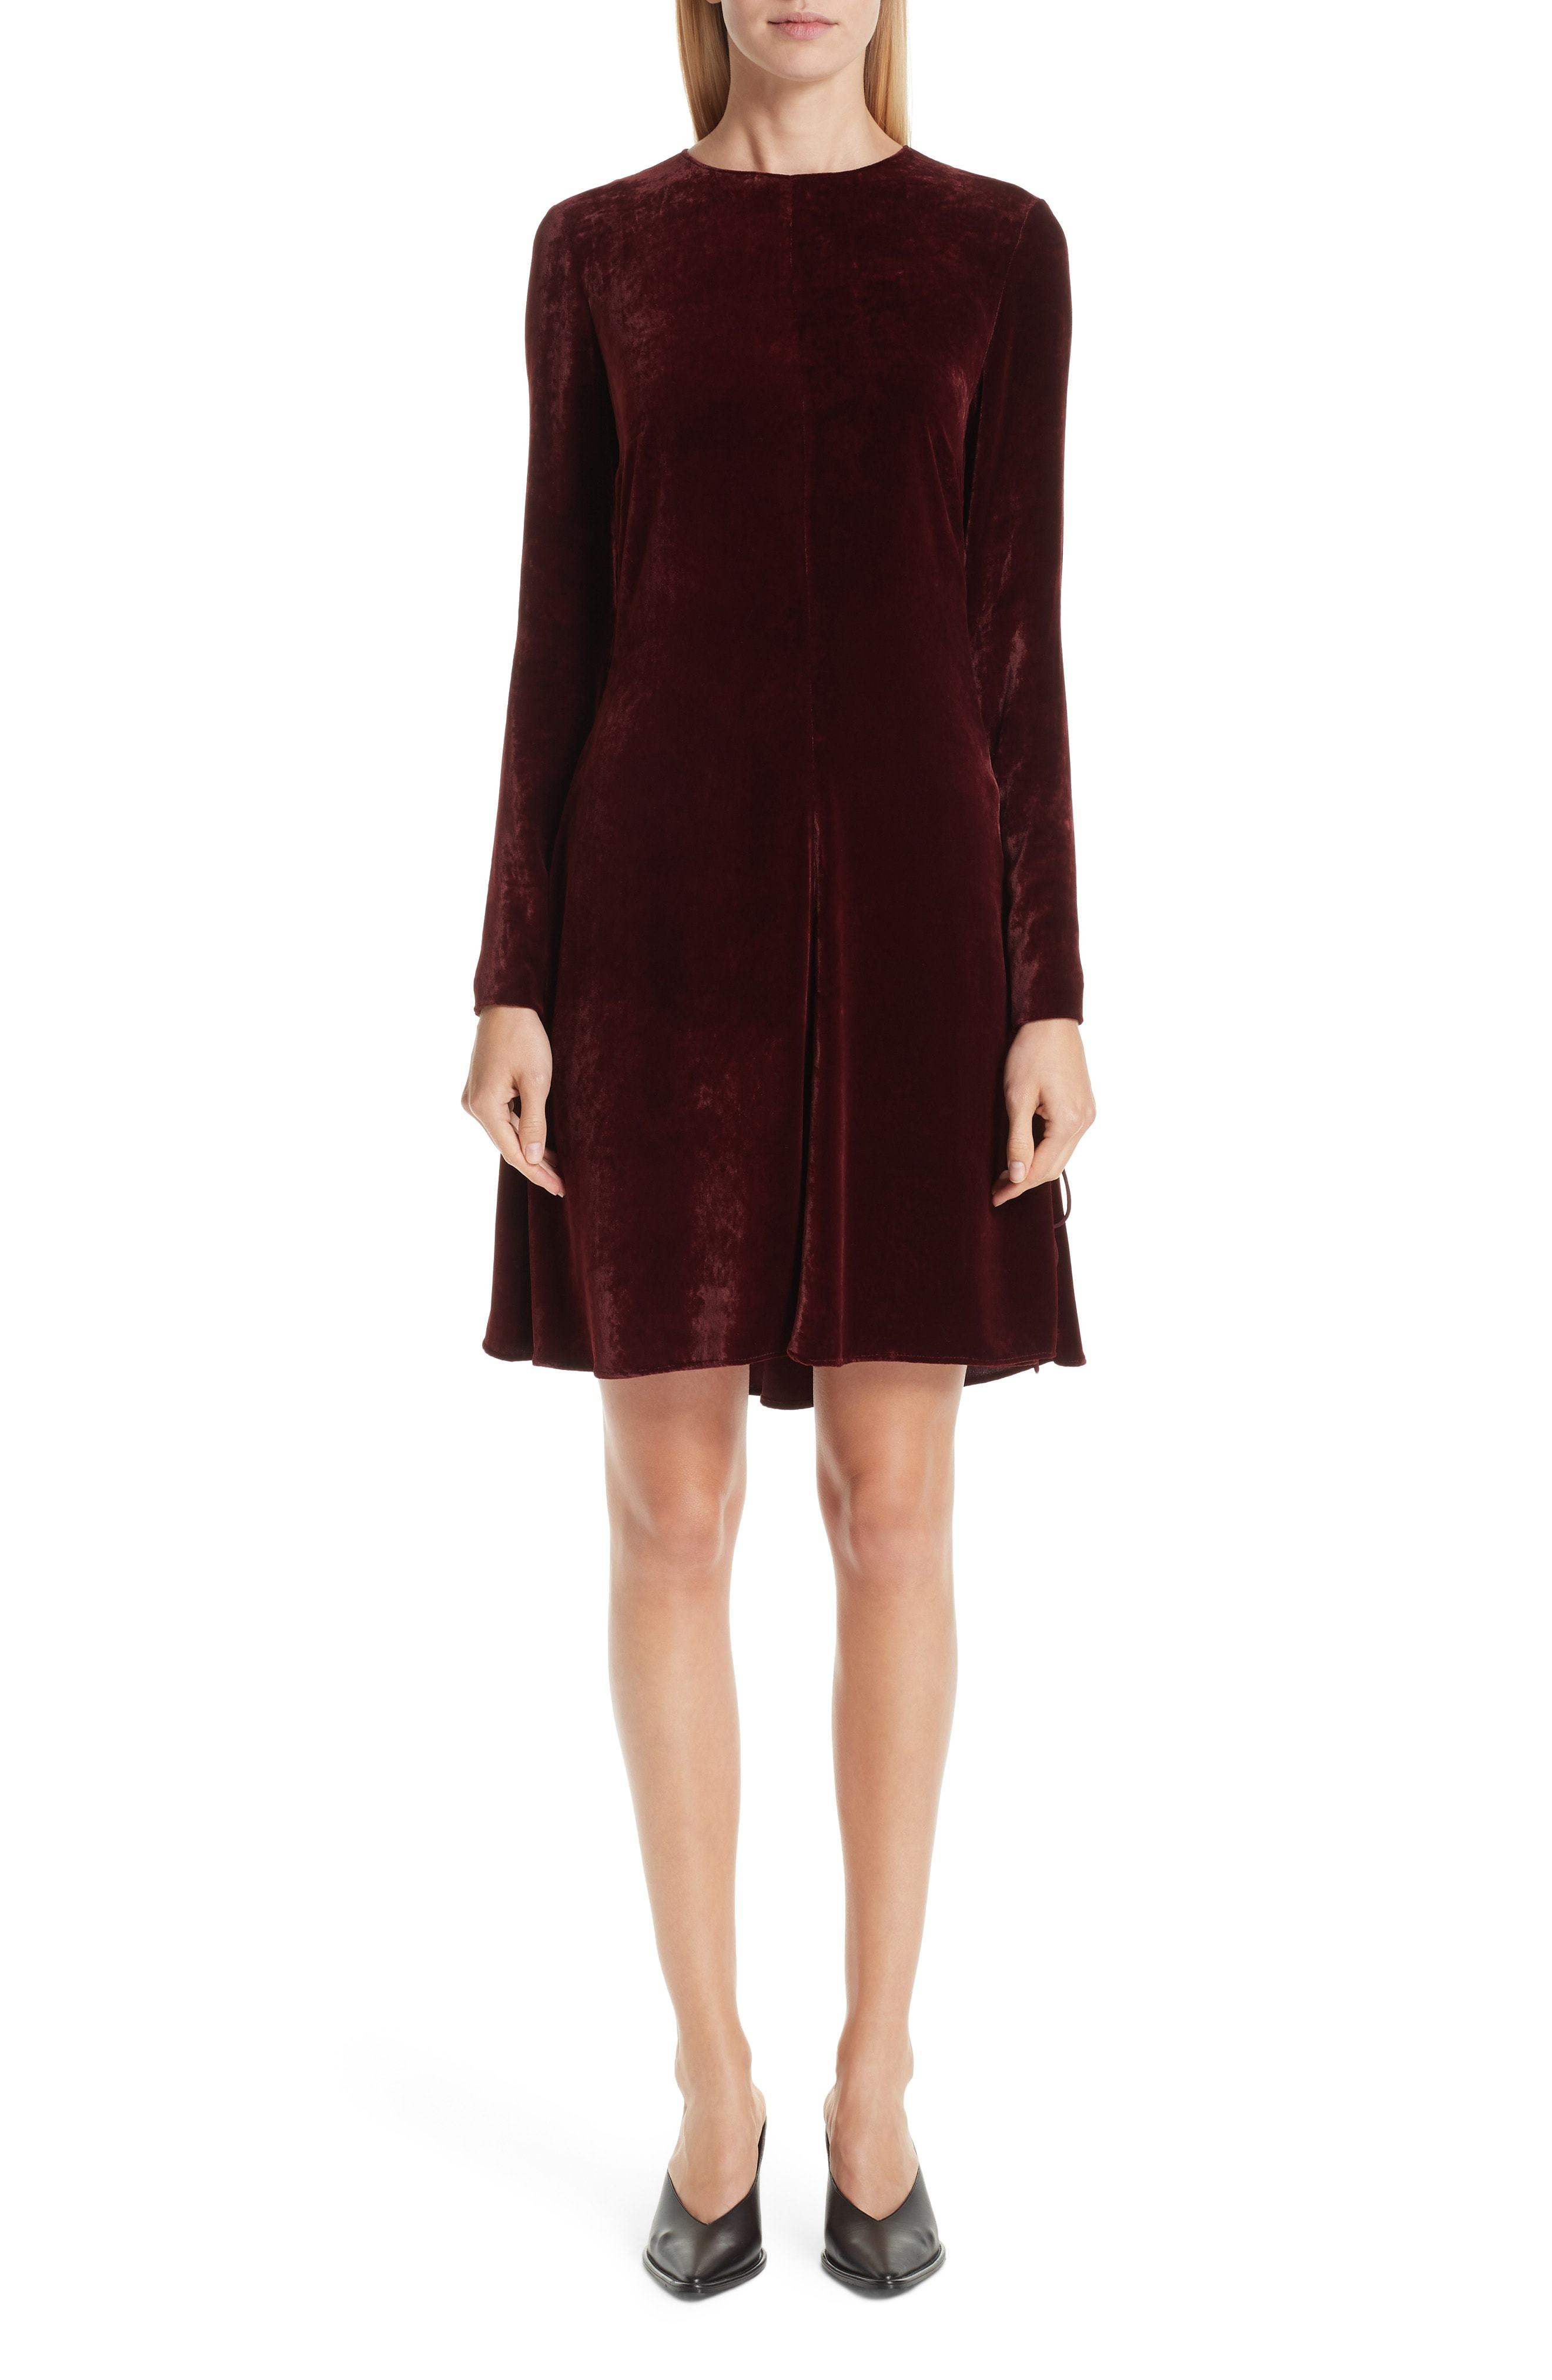 Stella McCartney Lace Up Side Velvet Dress, $953 | Nordstrom 